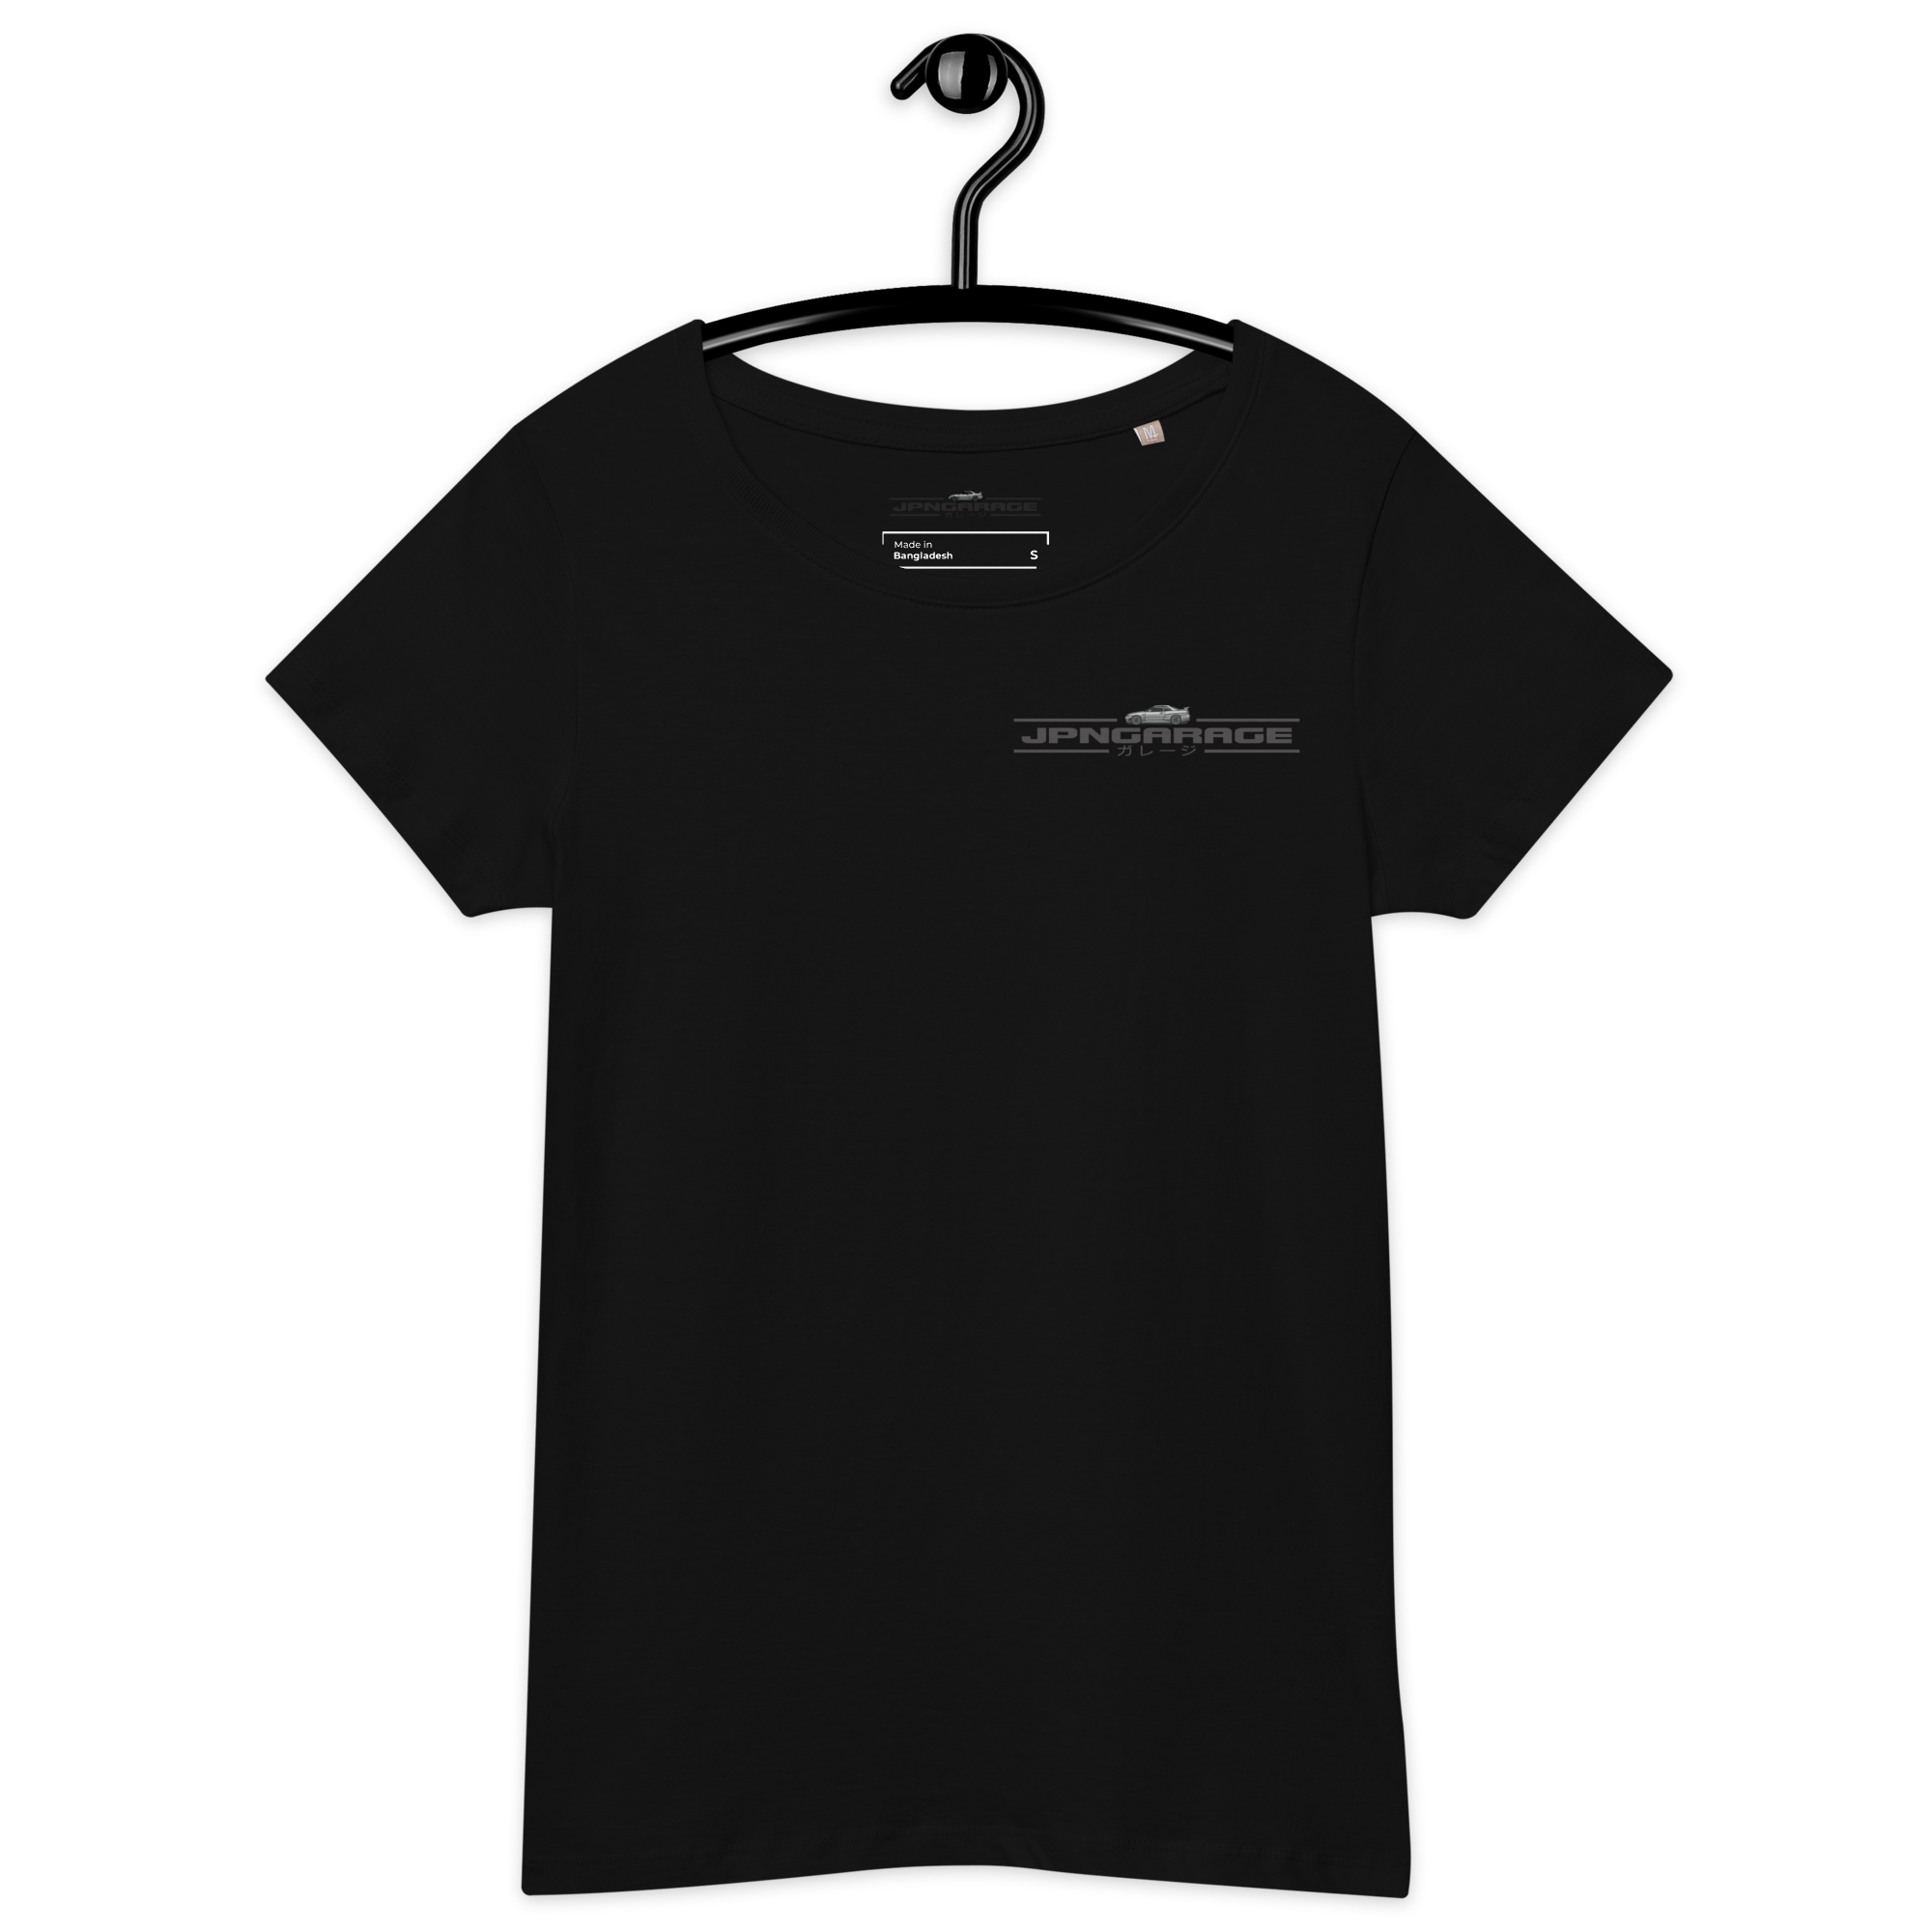 #JPNGarage GTR T-Shirt - #BNR34 Grau Damen 